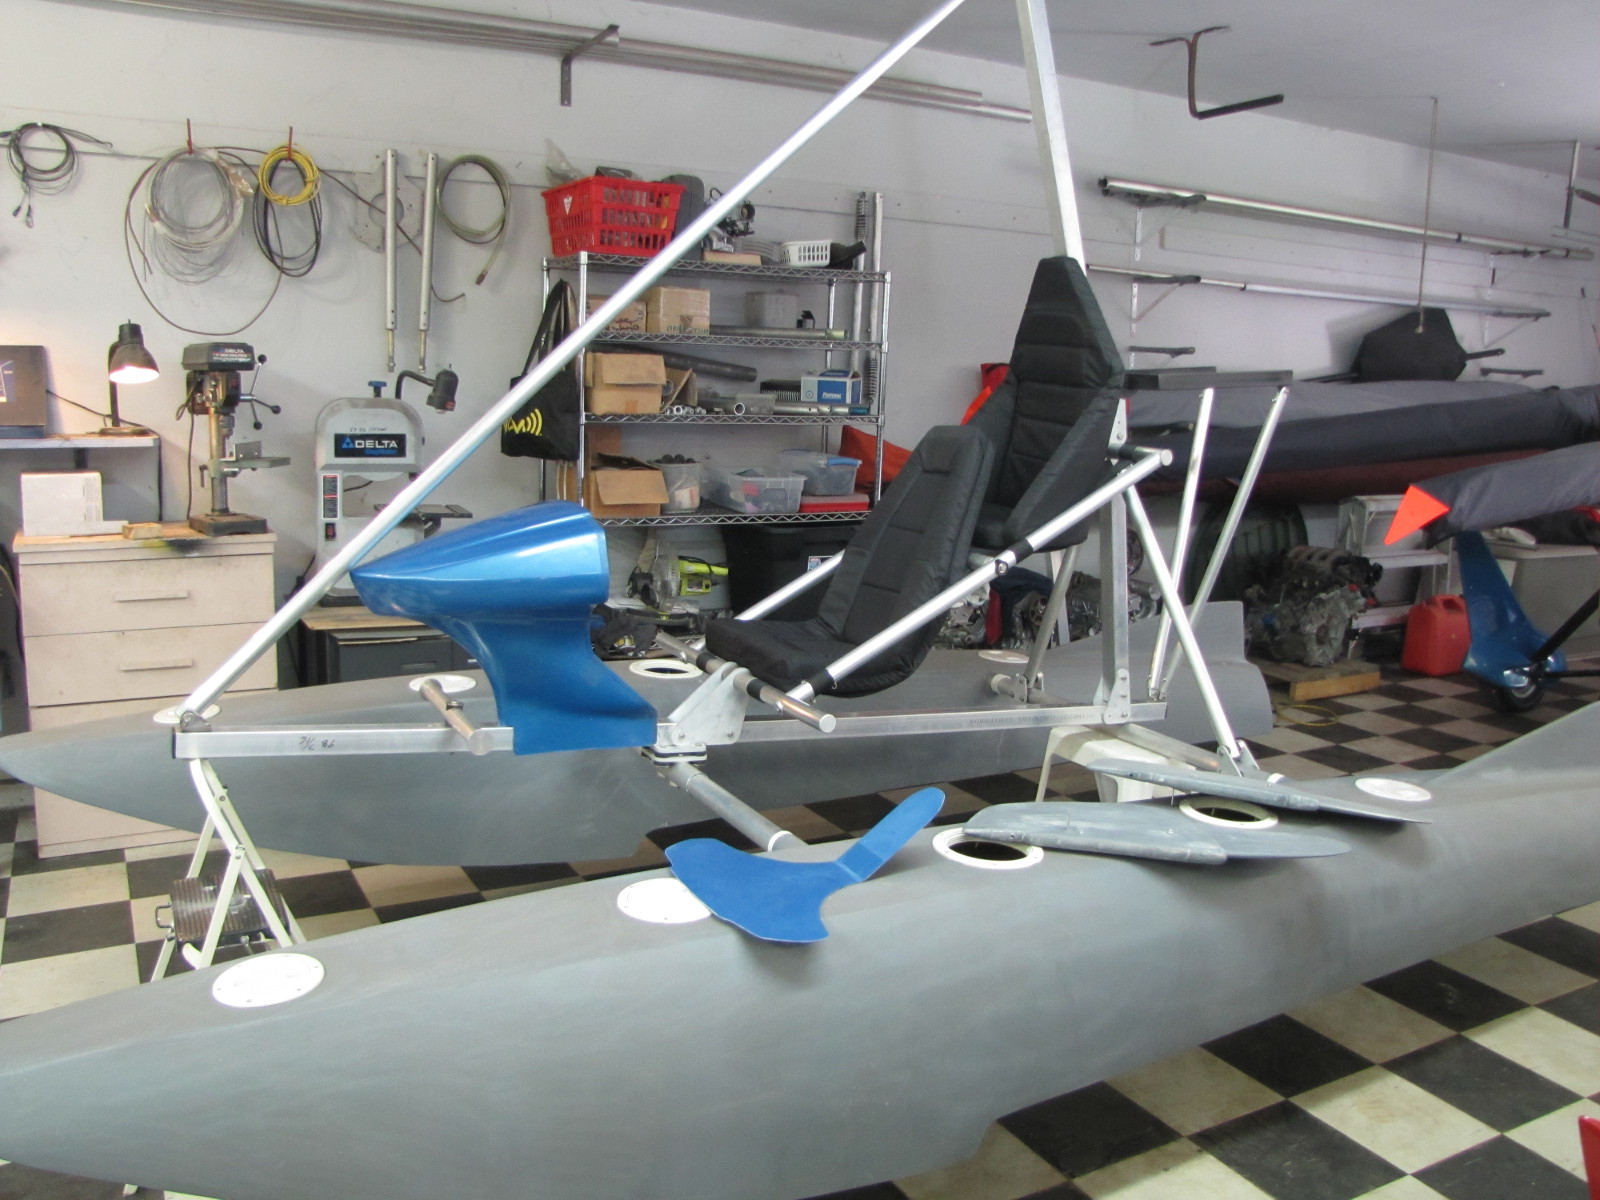 Air Trikes: Eagle-Aqua and trike floats